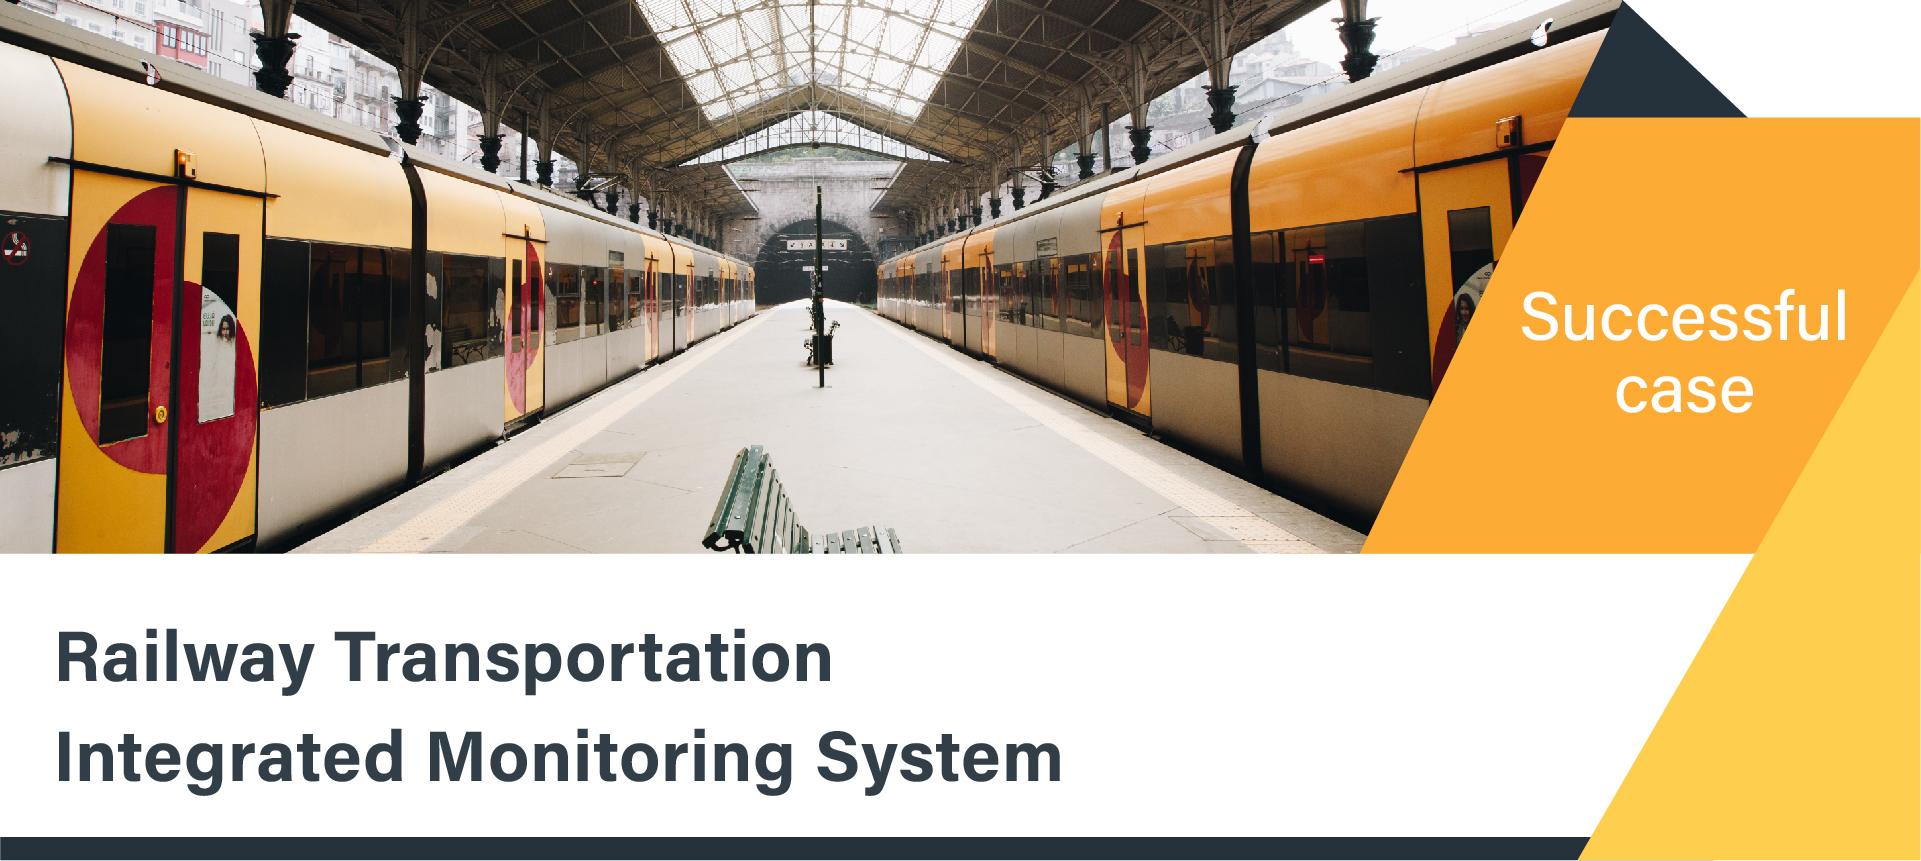 Railway Transportation Integrated Monitoring System